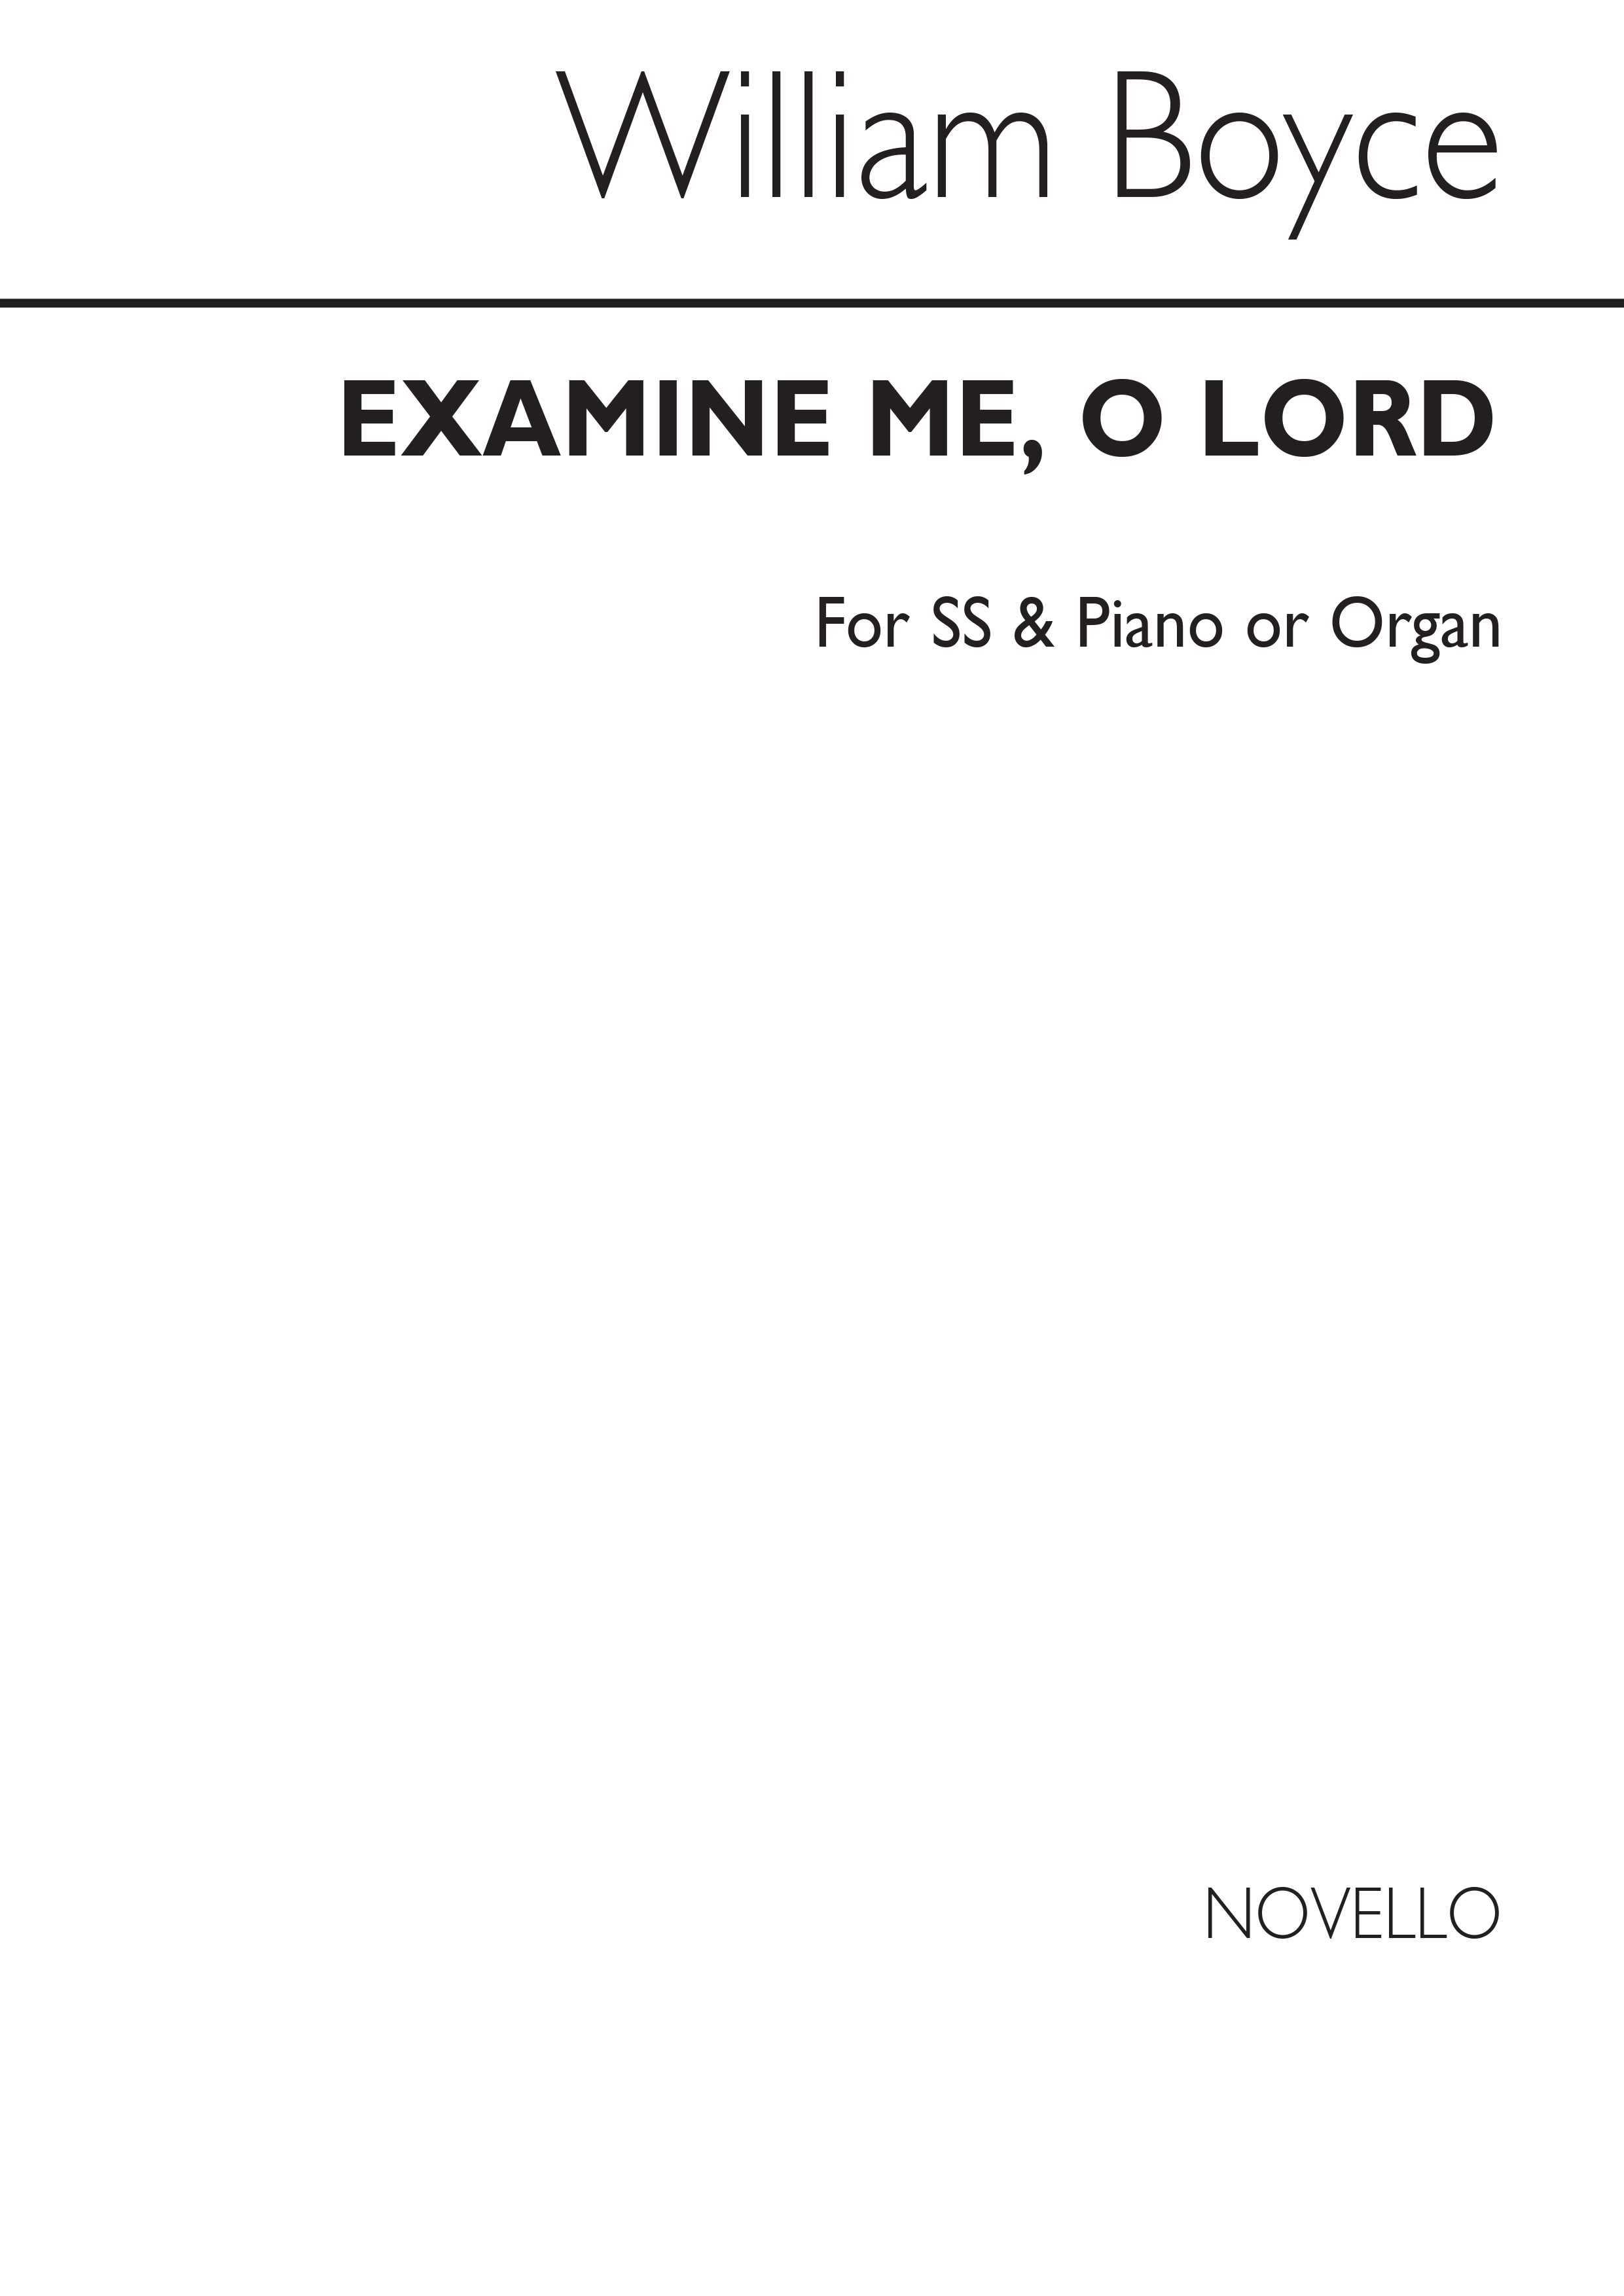 William Boyce: Examine Me, O Lord